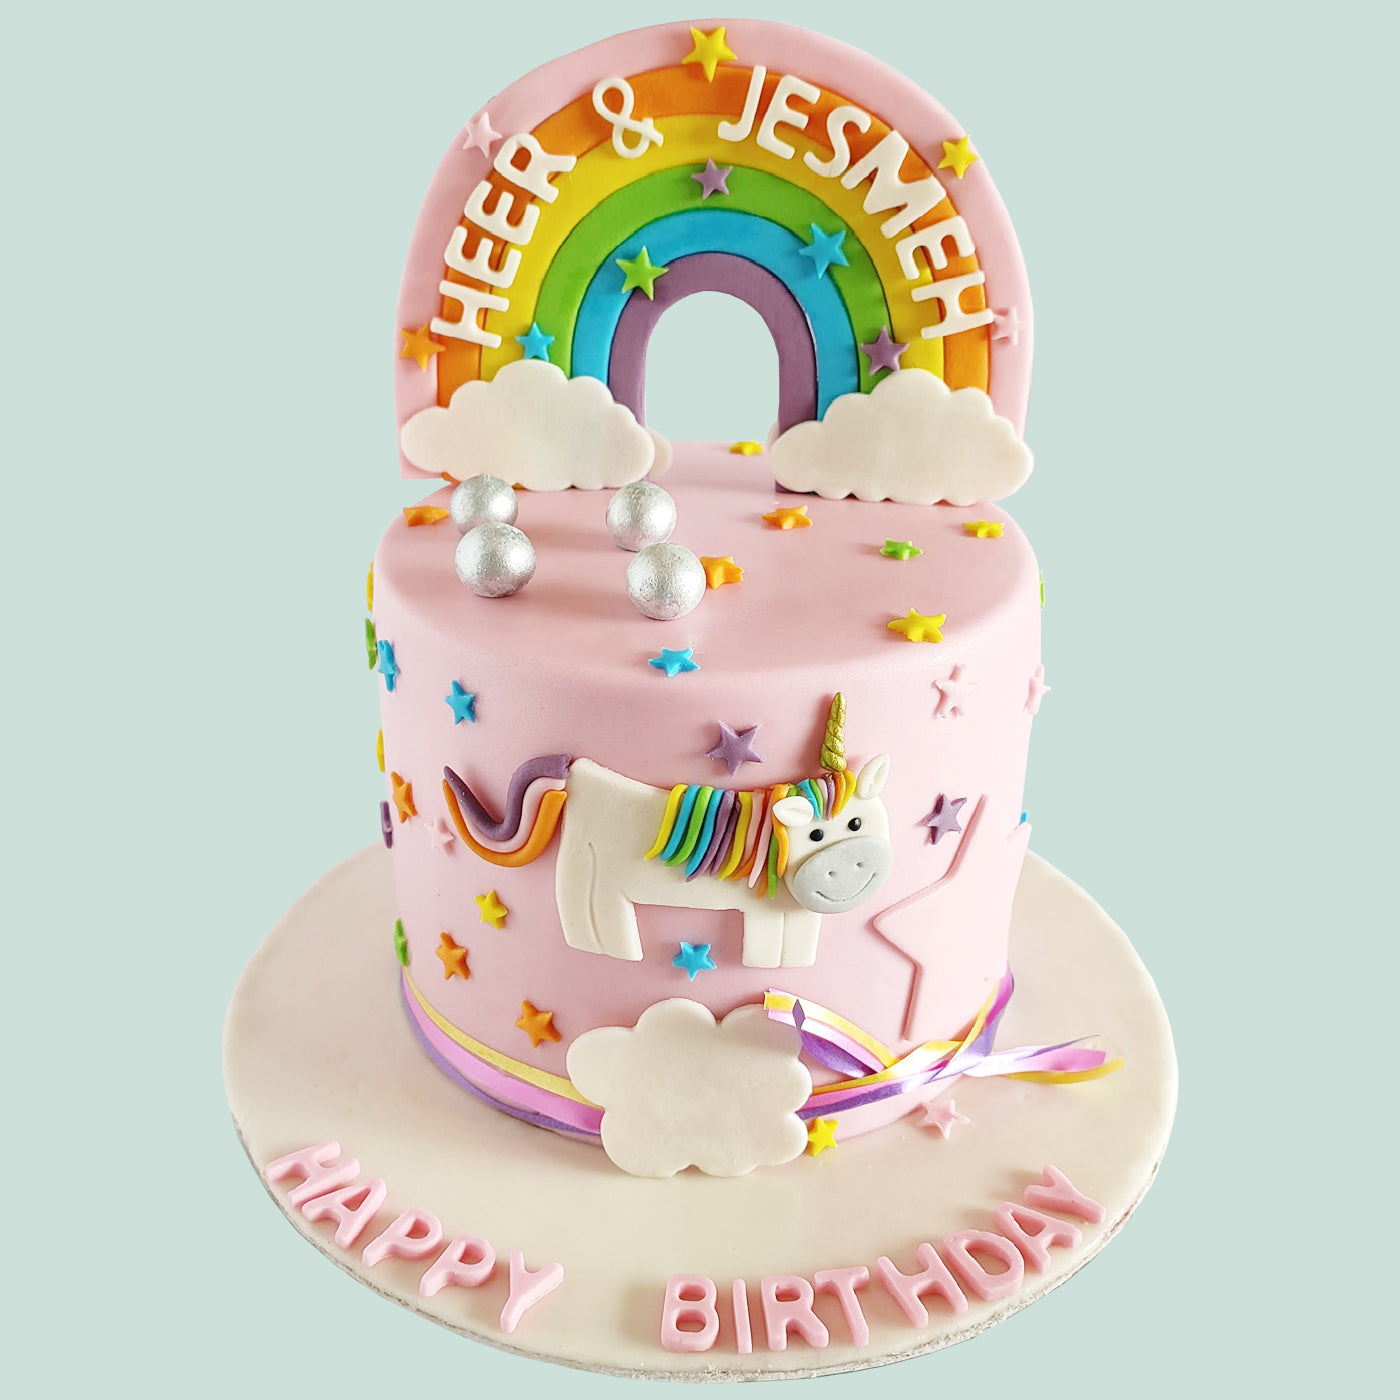 Easy Rainbow Birthday Cake Using Skittles and Marshmallows - My Bored  Toddler